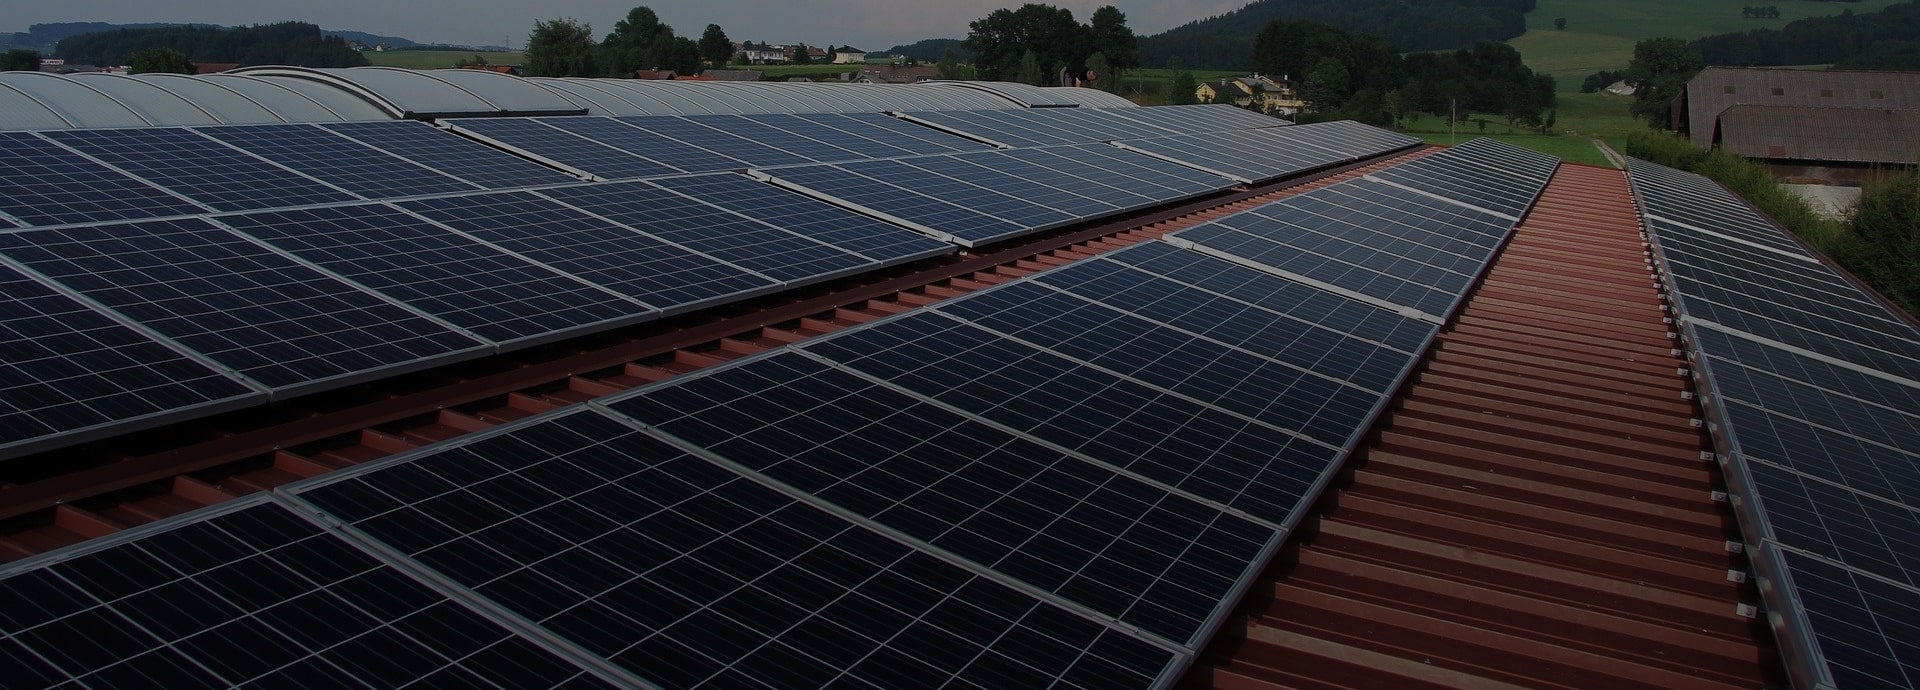 Installation Of Solar Panels On Flat Rooftops